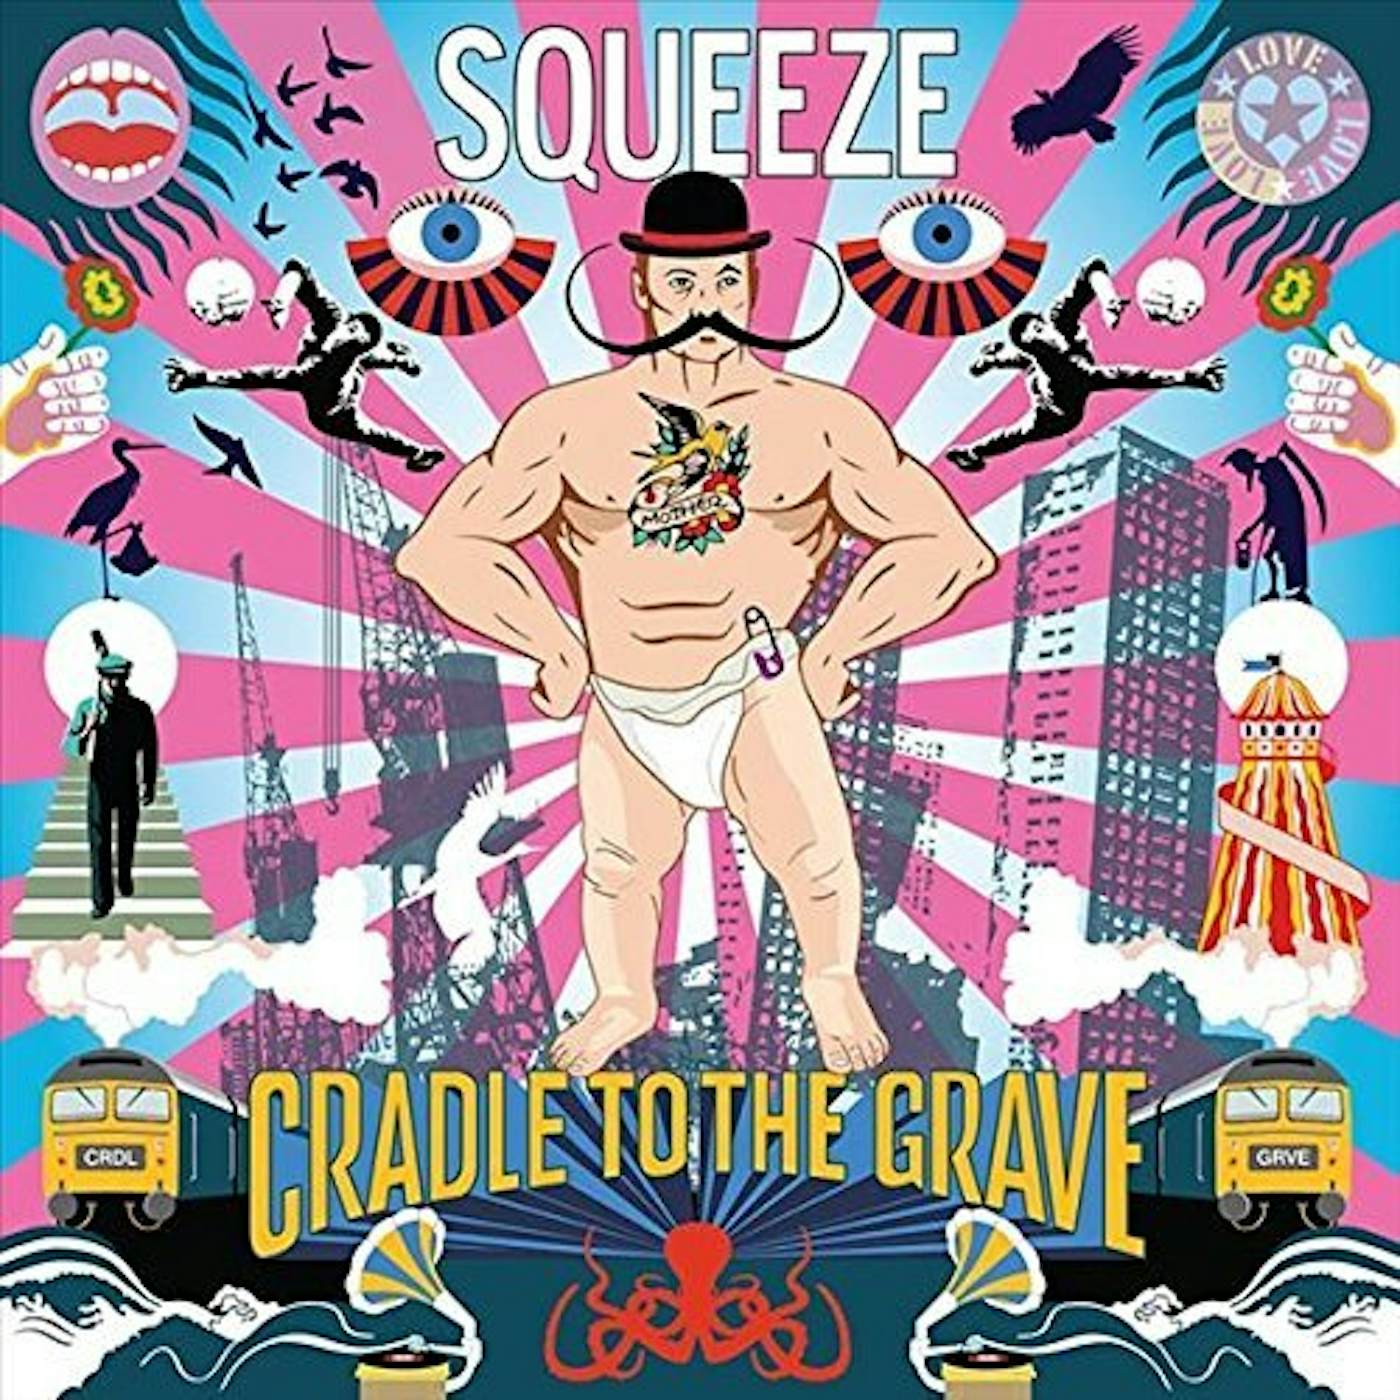 Squeeze Cradle To The Grave Vinyl Record